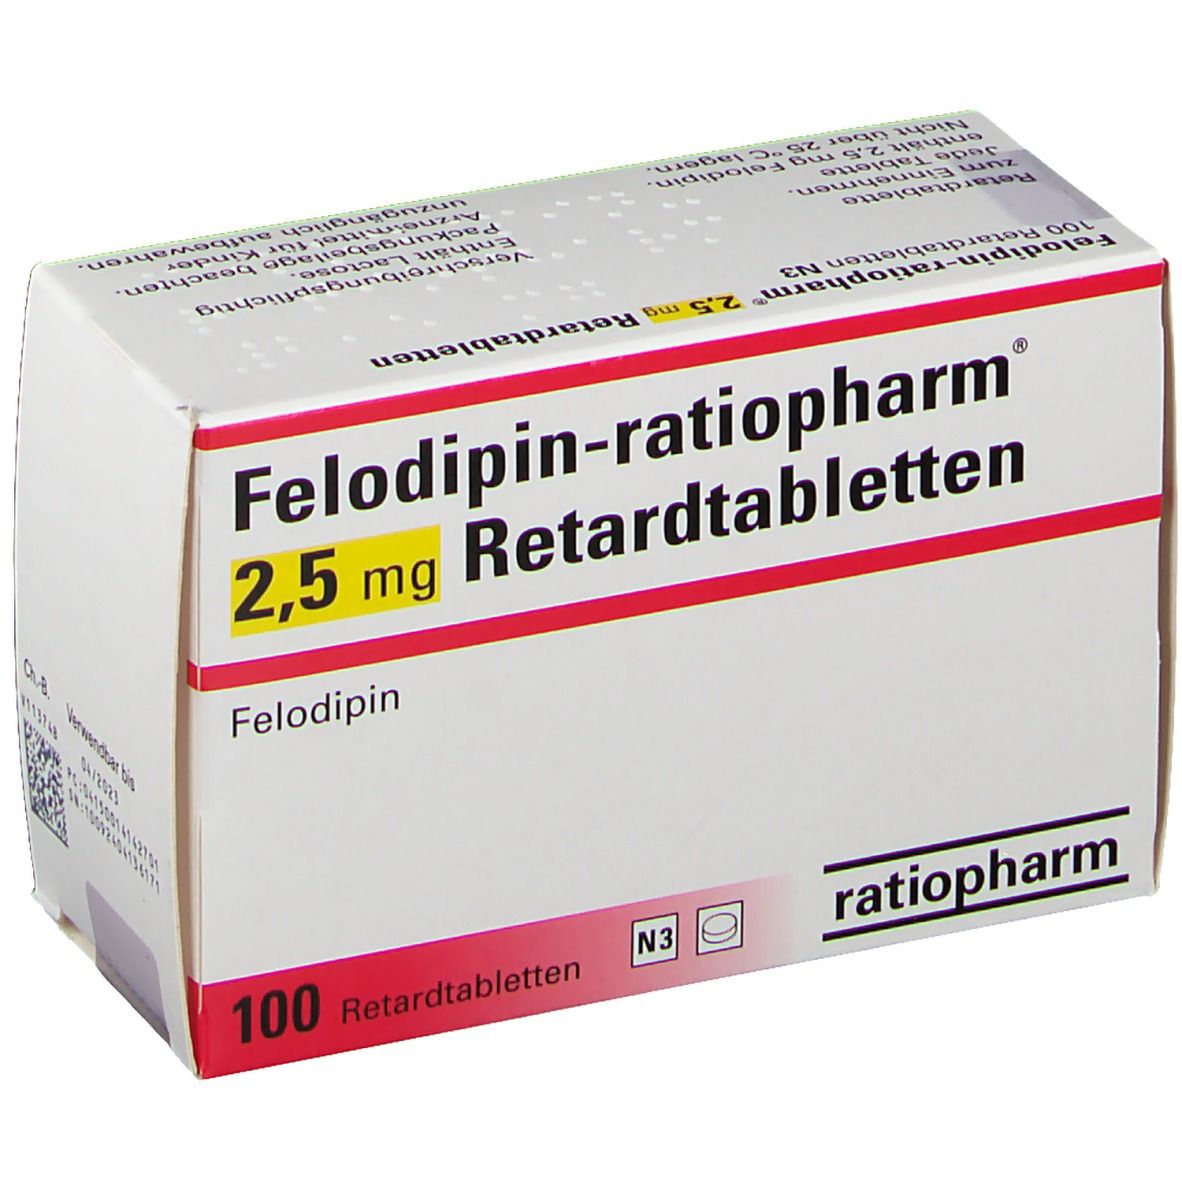 Felodipin-ratiopharm® 2,5 mg St -